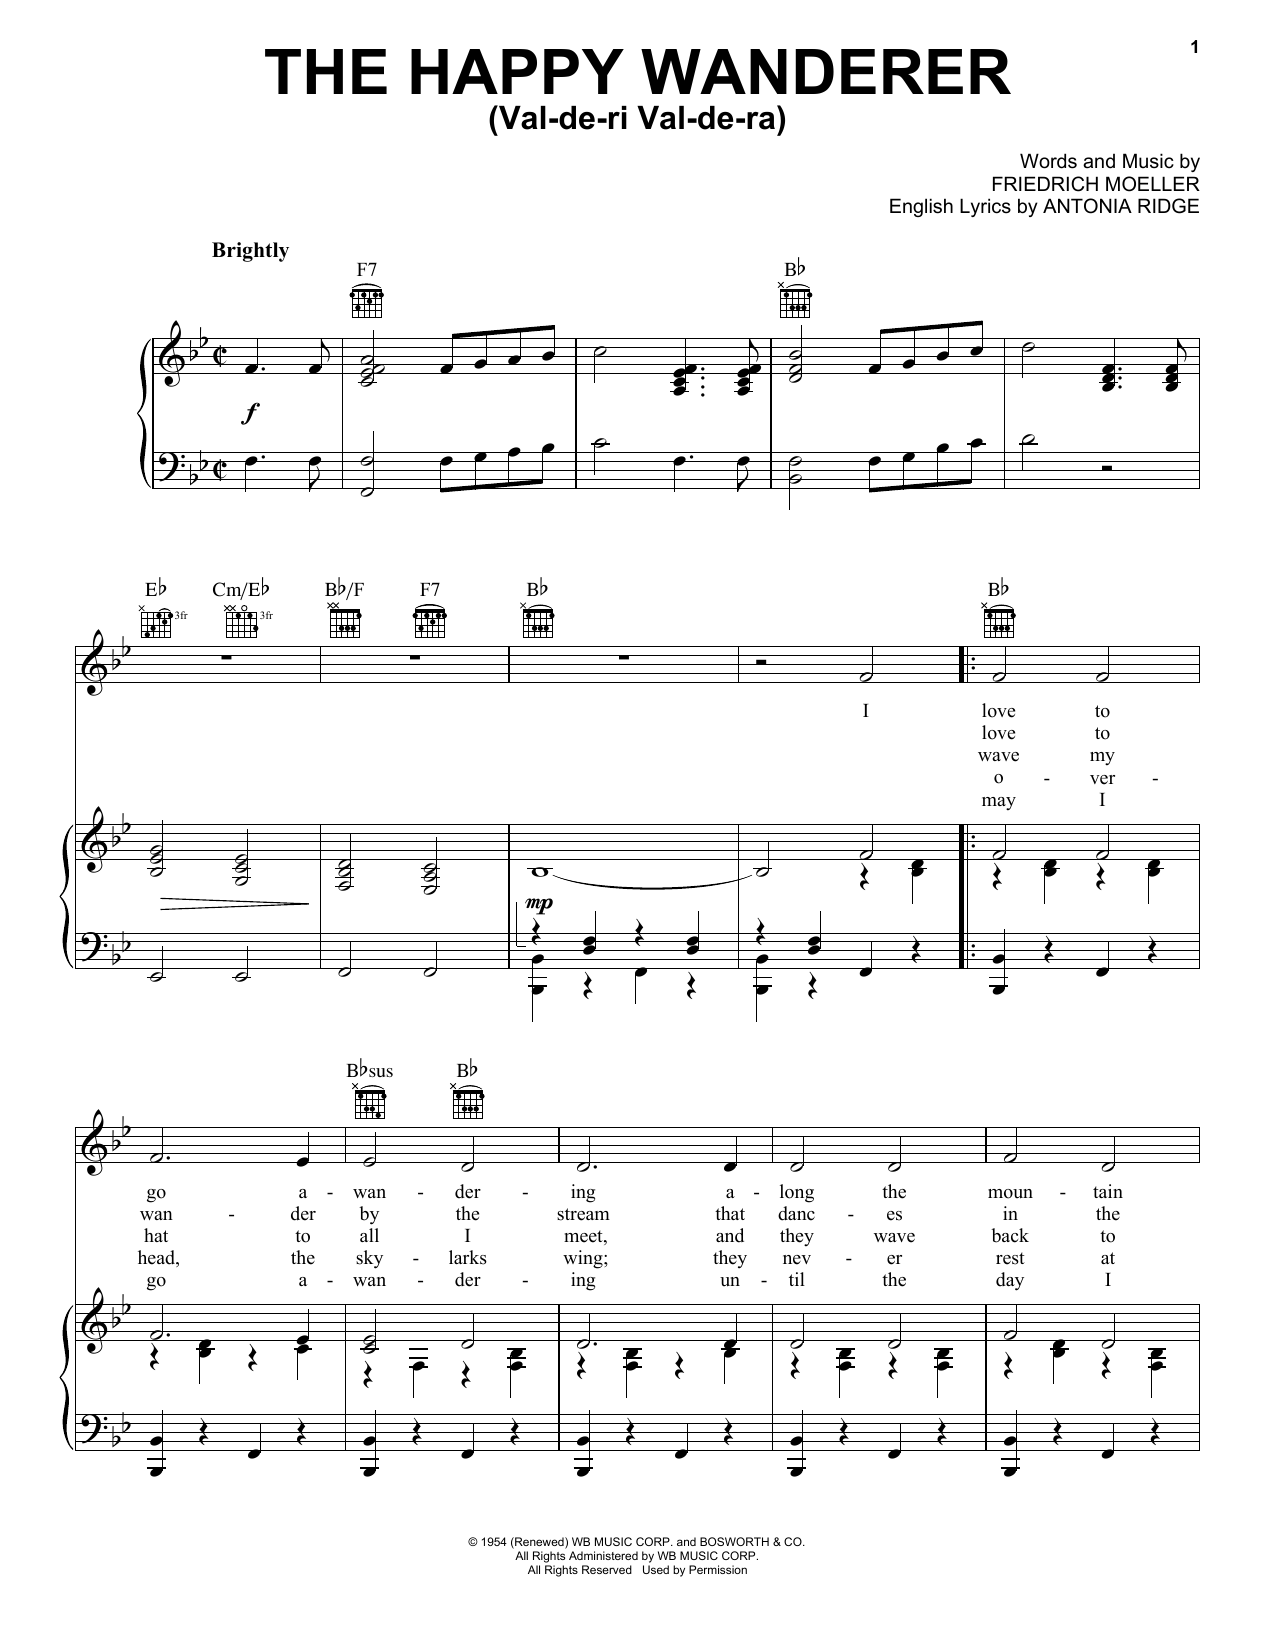 Antonia Ridge The Happy Wanderer (Val-de-ri Val-de-ra) Sheet Music Notes & Chords for Melody Line, Lyrics & Chords - Download or Print PDF